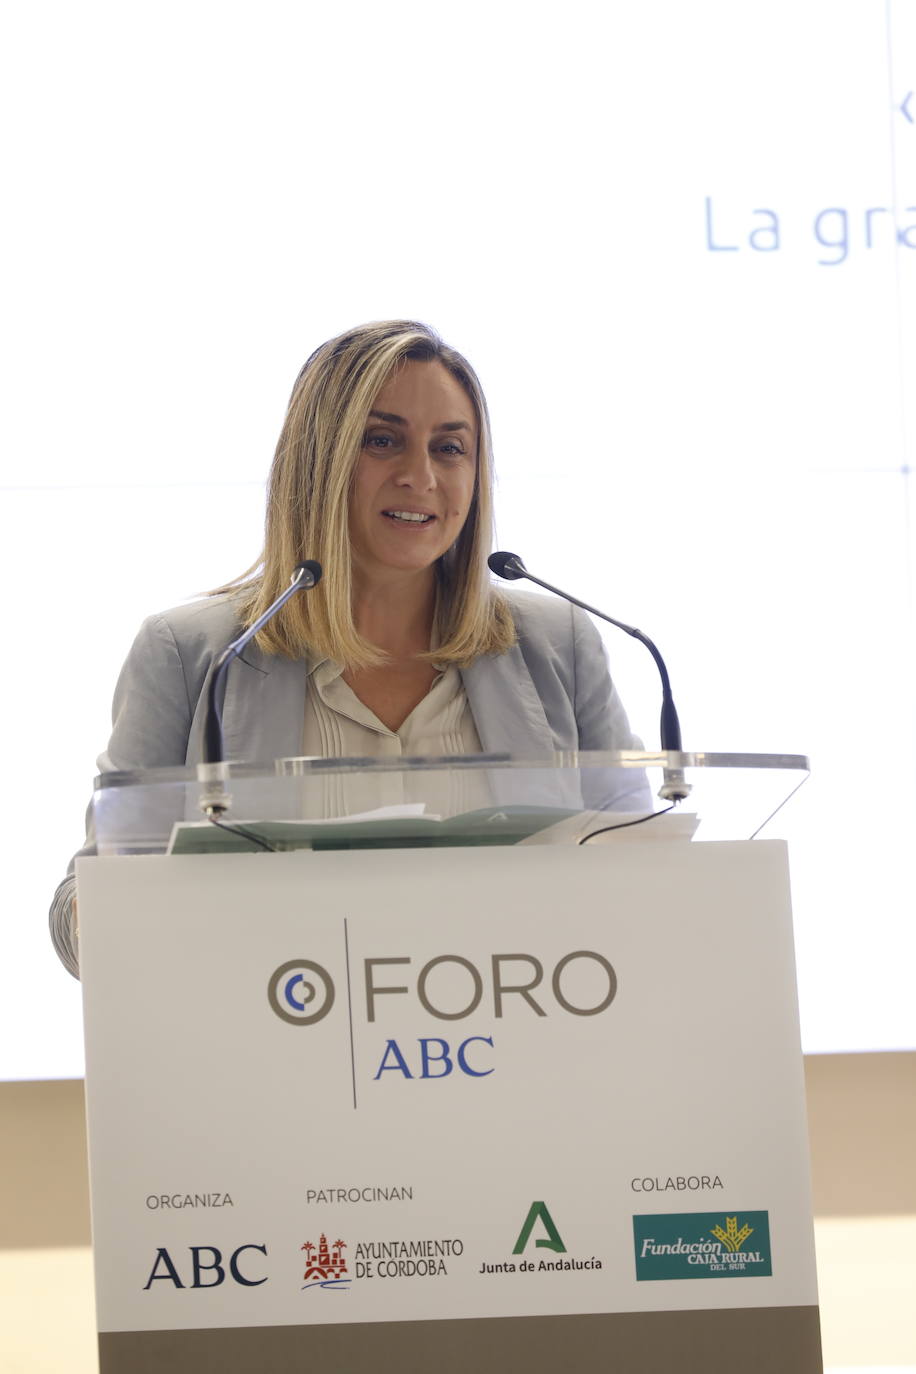 El Foro de ABC Córdoba sobre la Base Logística, en imágenes (I)